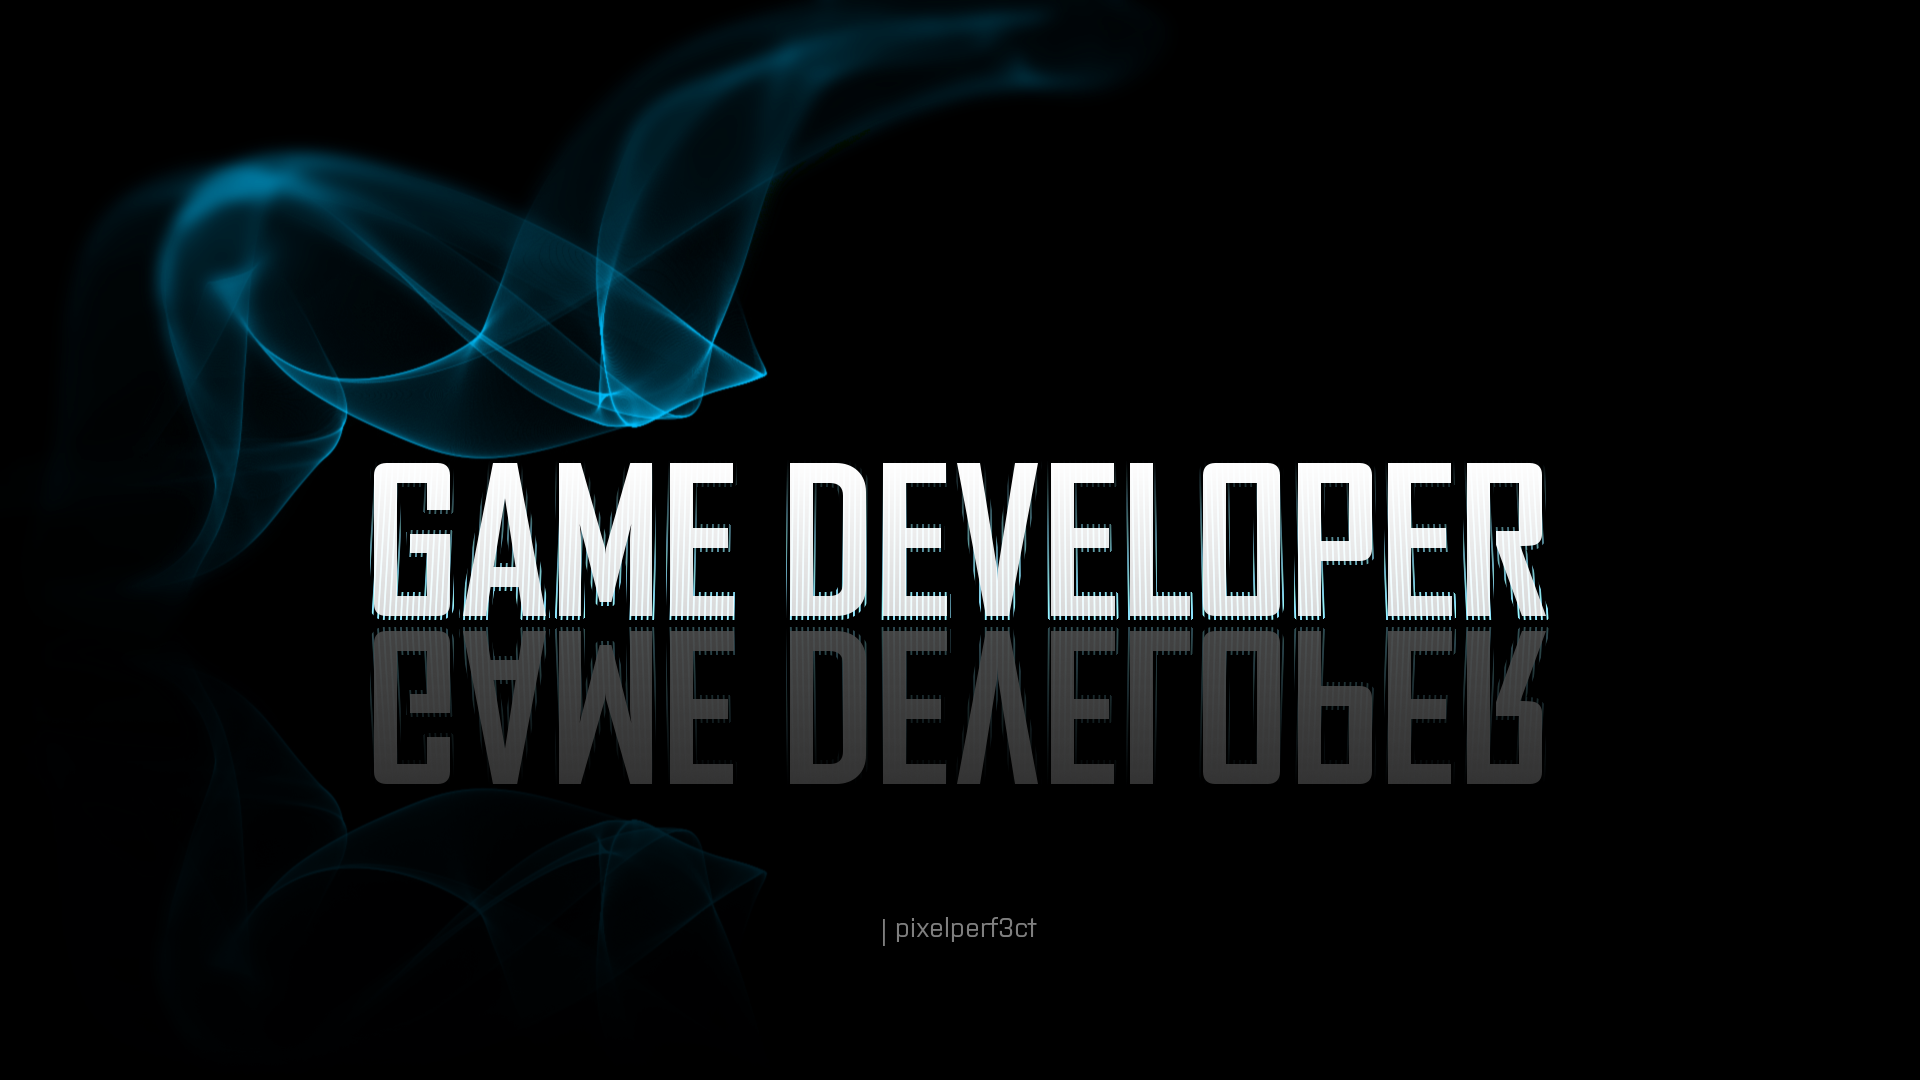 Game Developer by pixelperf3ct on DeviantArt